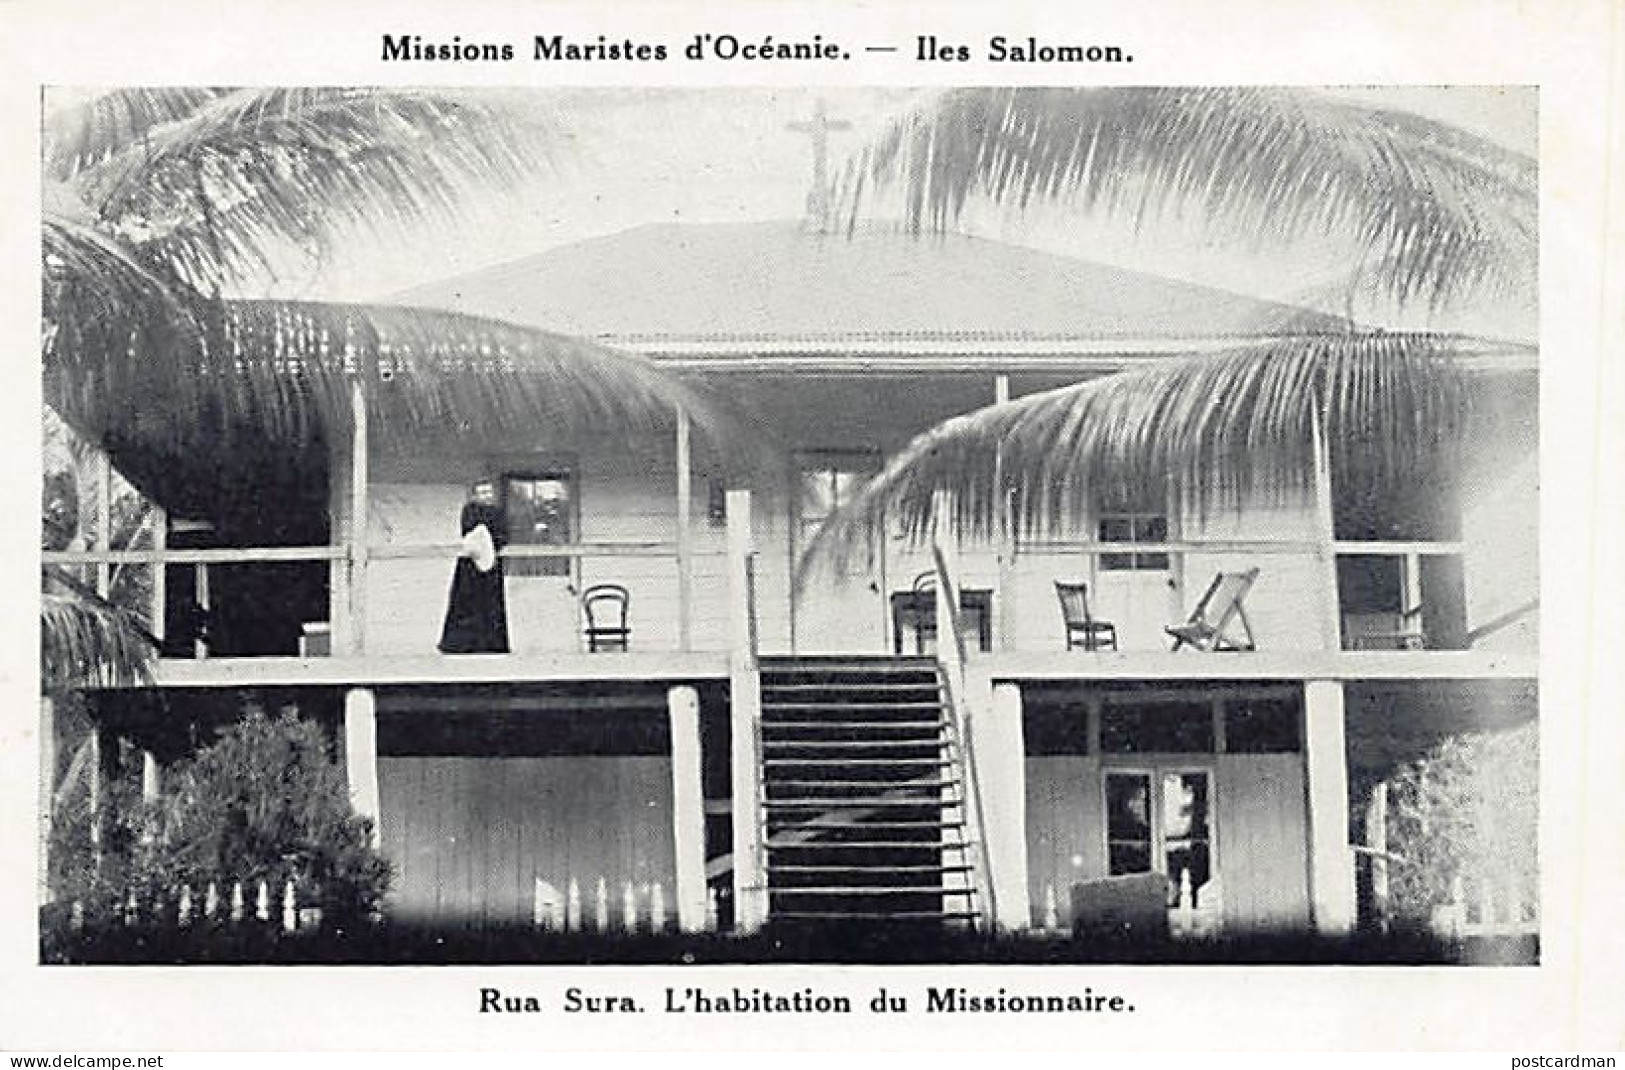 Solomon Islands - Rua Sura Island (off Aola Bay, Guadalcanal) - The Missionary's Dwelling - Publ. Missions Maristes D'Oc - Solomon Islands